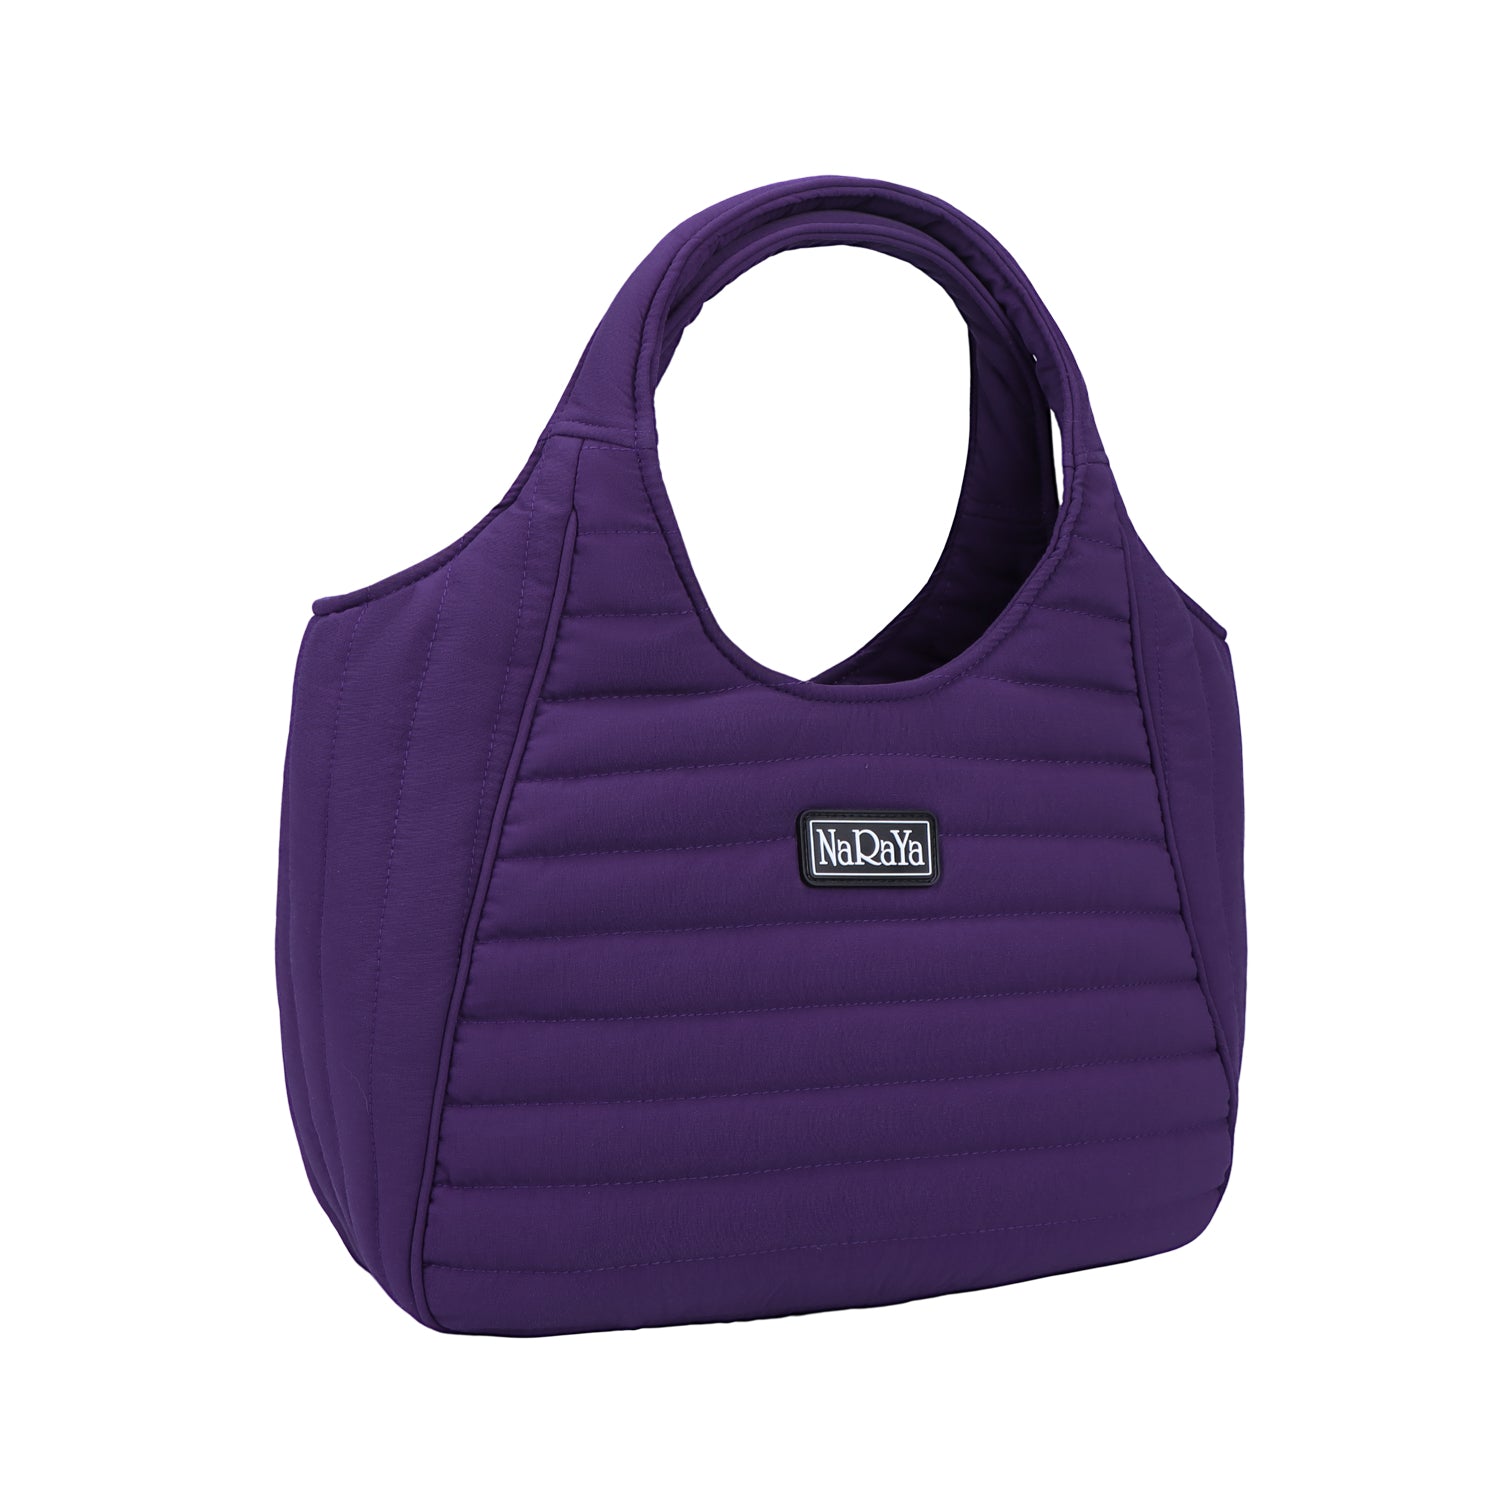 NaRaYa Nylon Handbag NL-04A